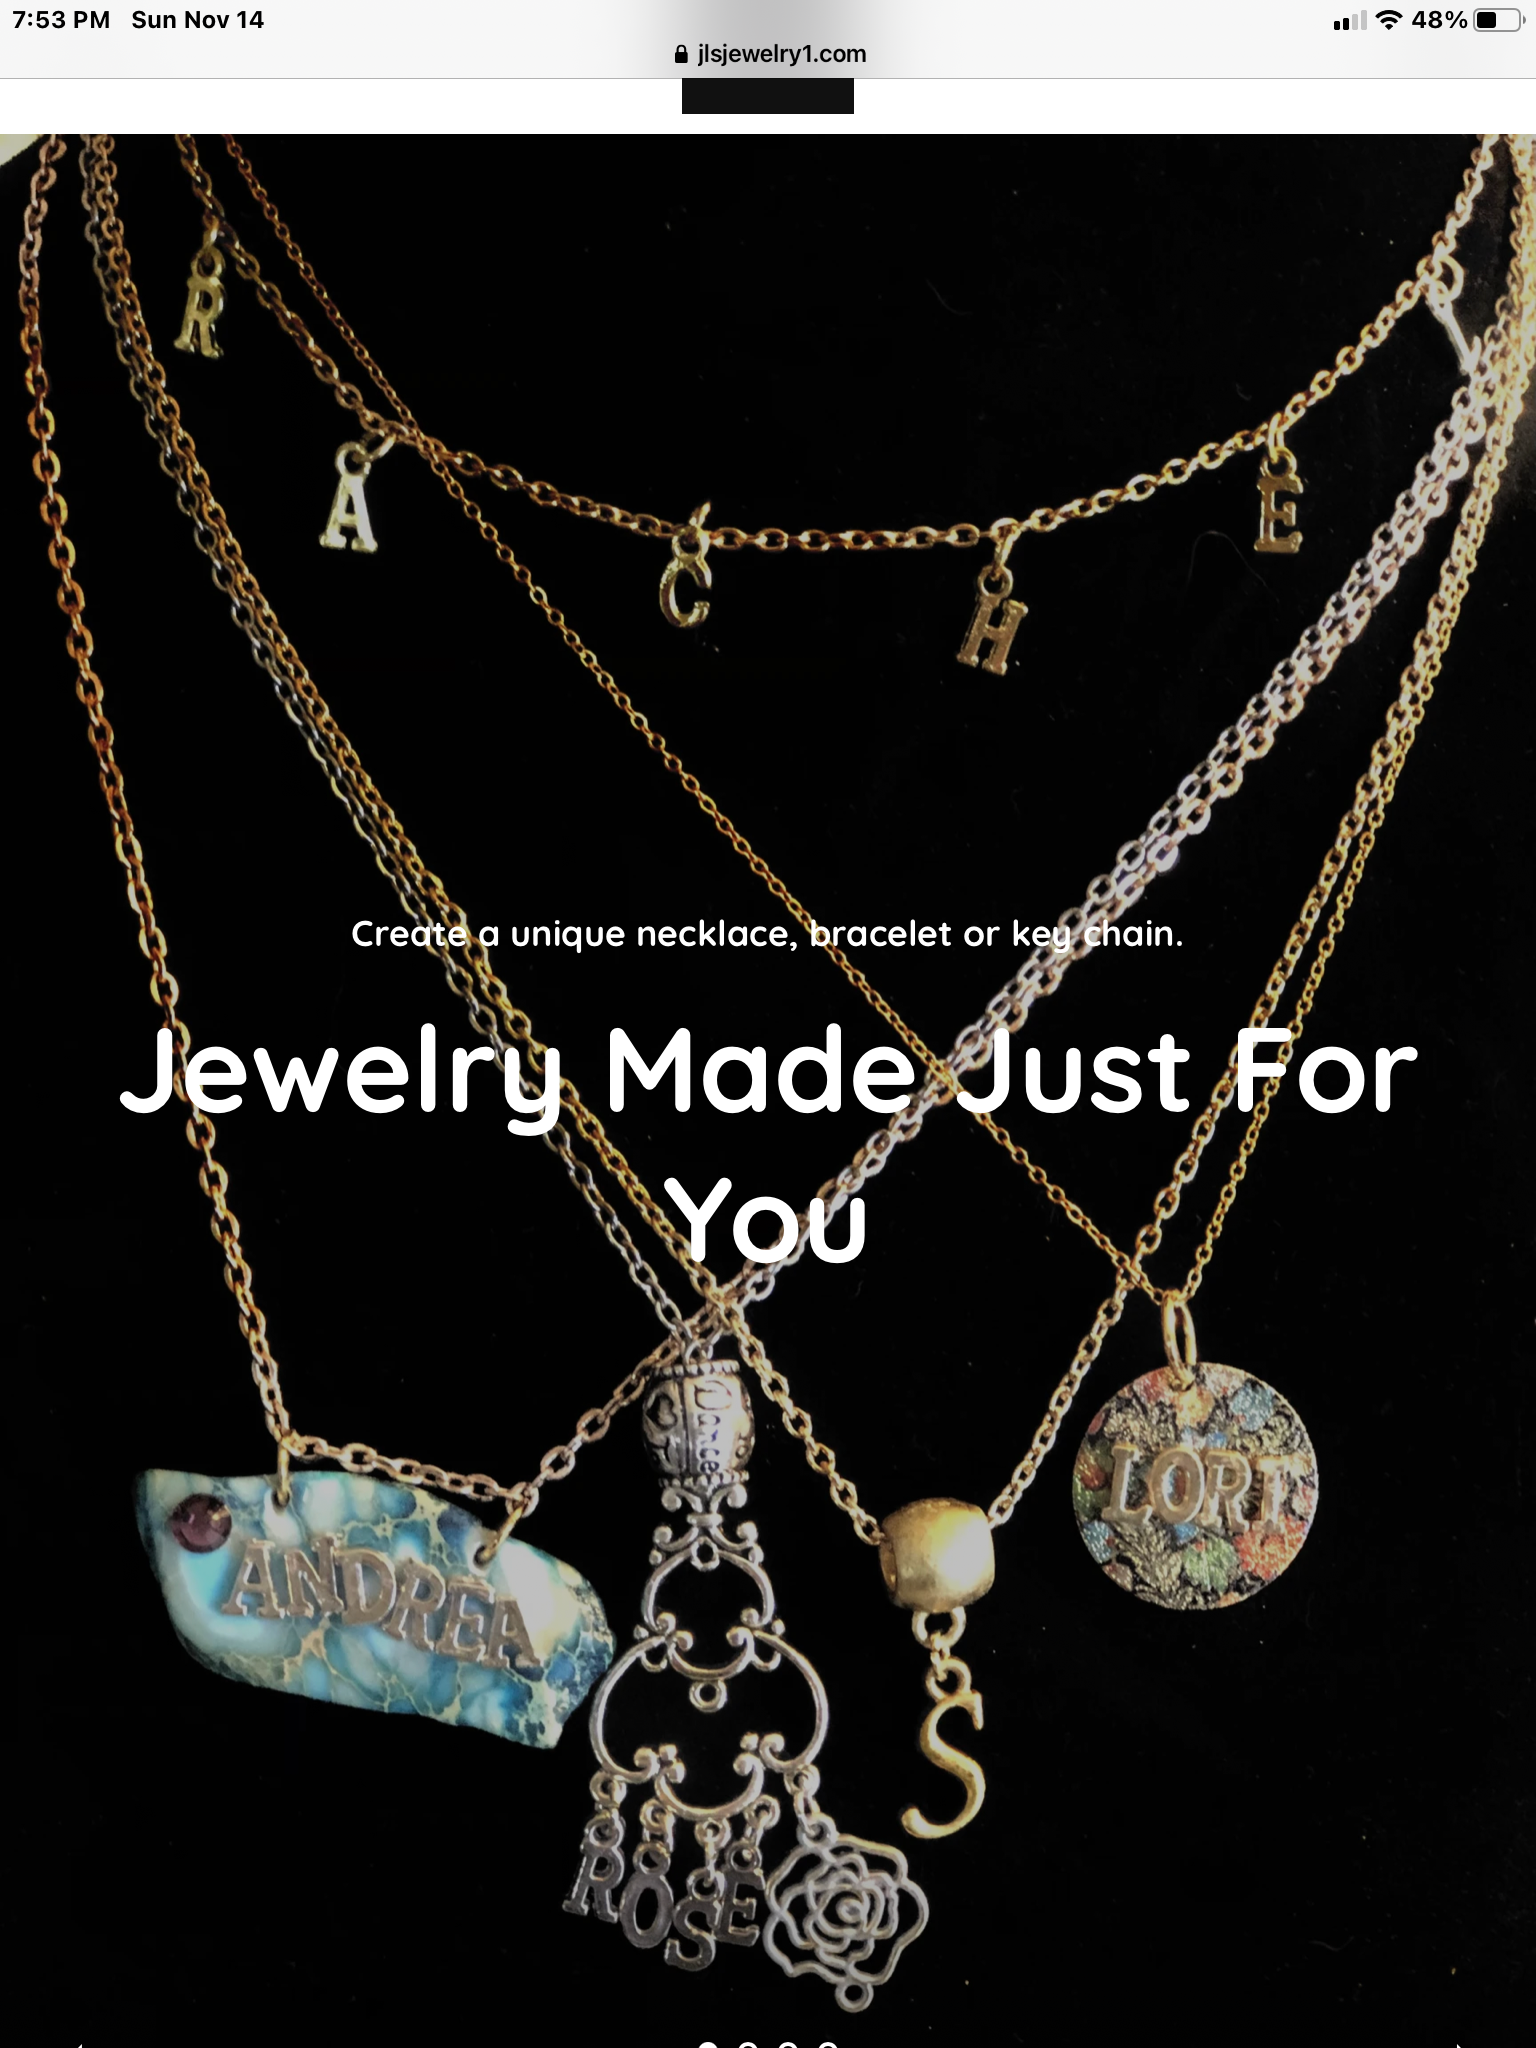 How to Find Custom Jewelry